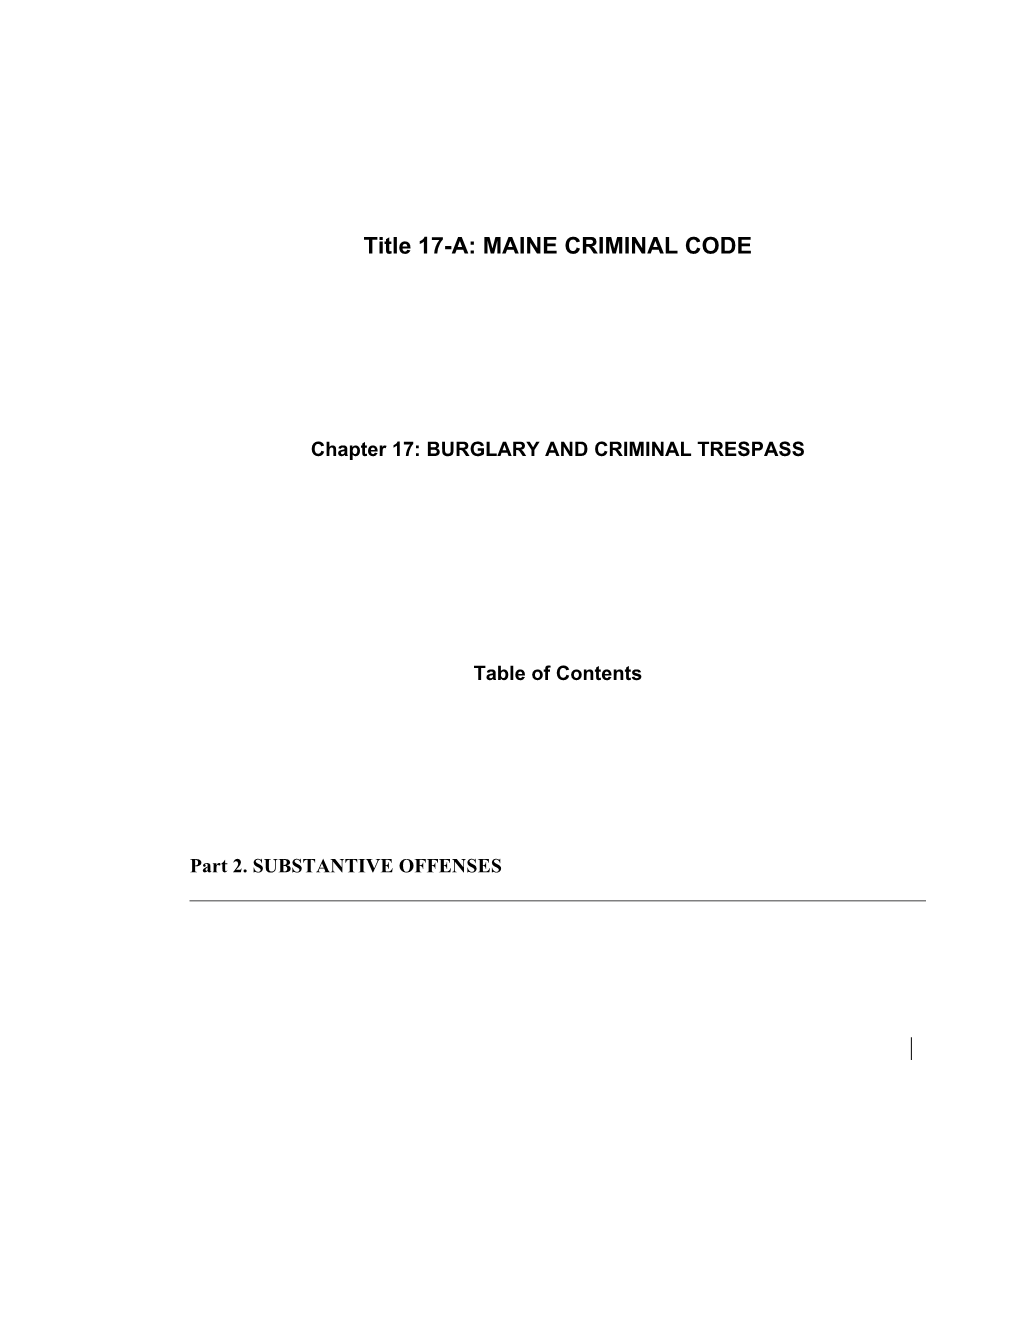 MRS Title 17-A, Chapter17: BURGLARY and CRIMINAL TRESPASS